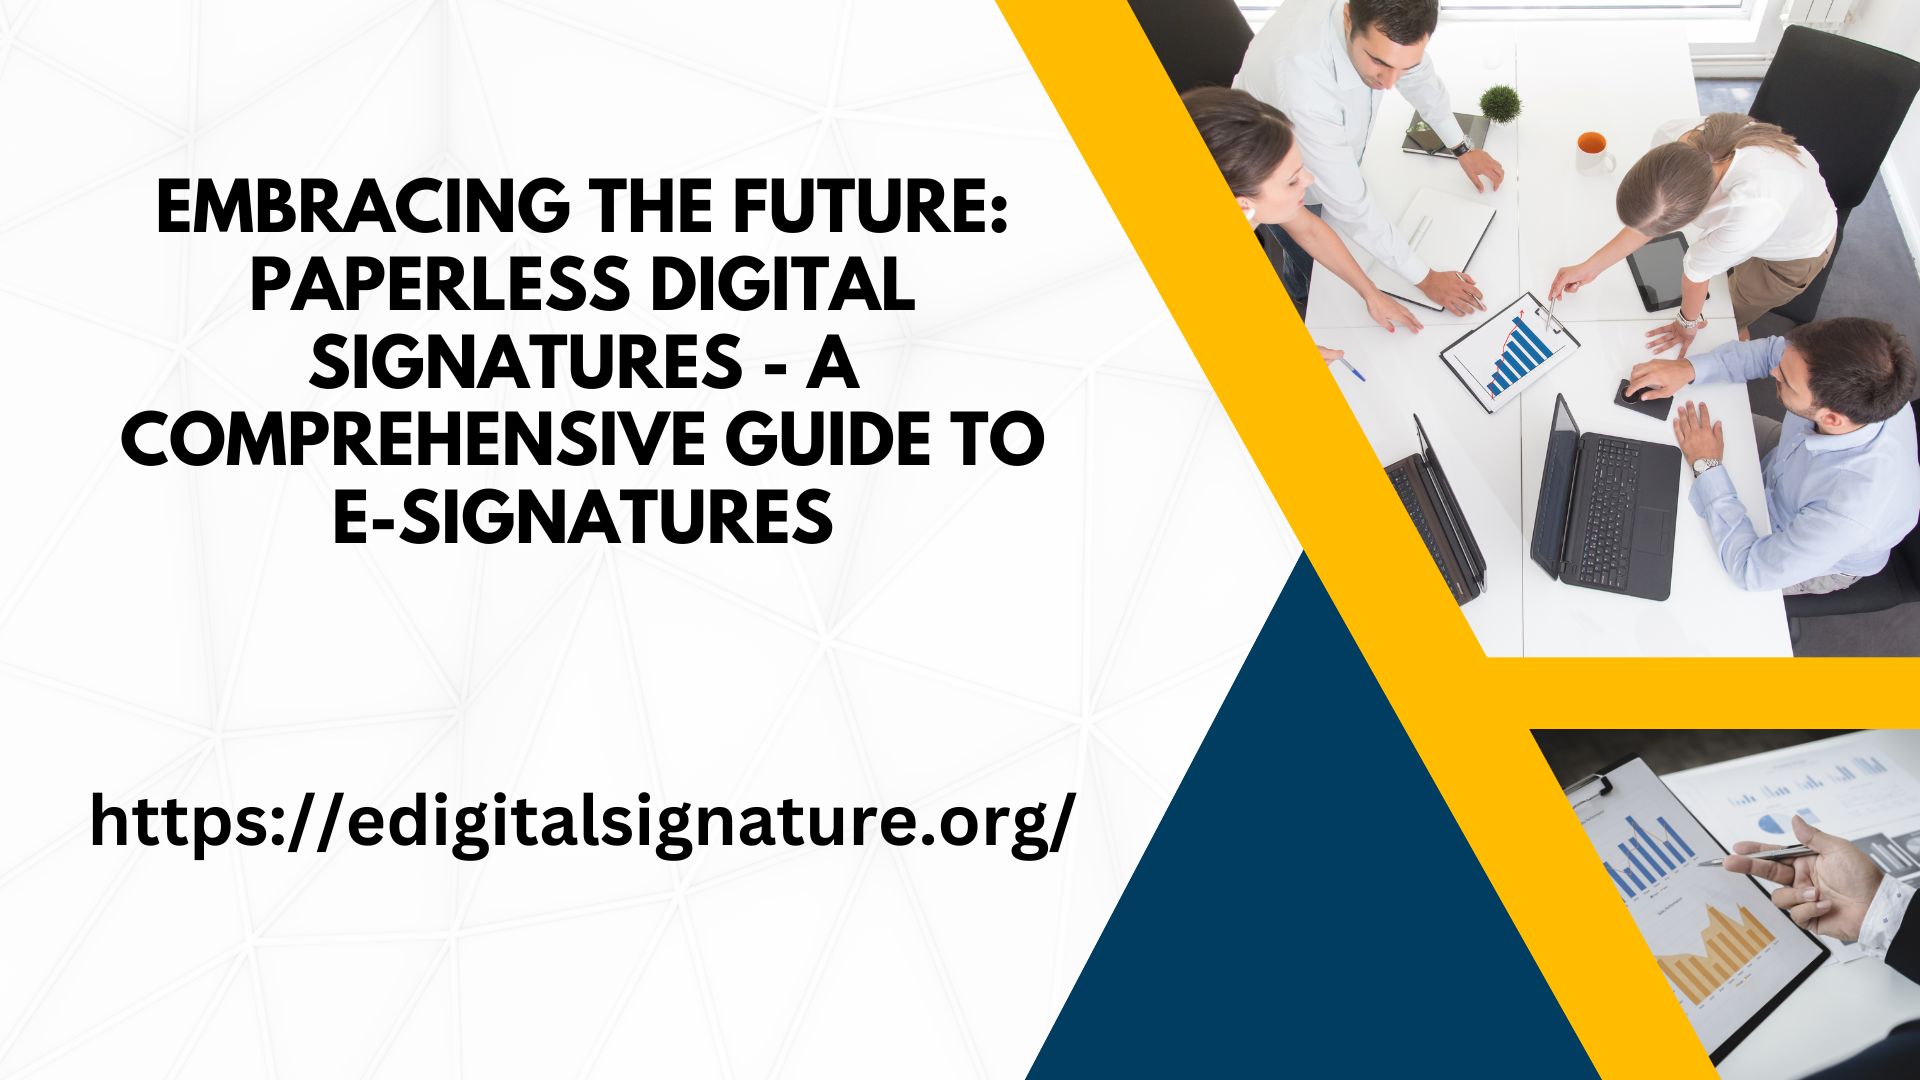 Embracing the Future: Paperless Digital Signatures - A Comprehensive Guide to E-Signatures